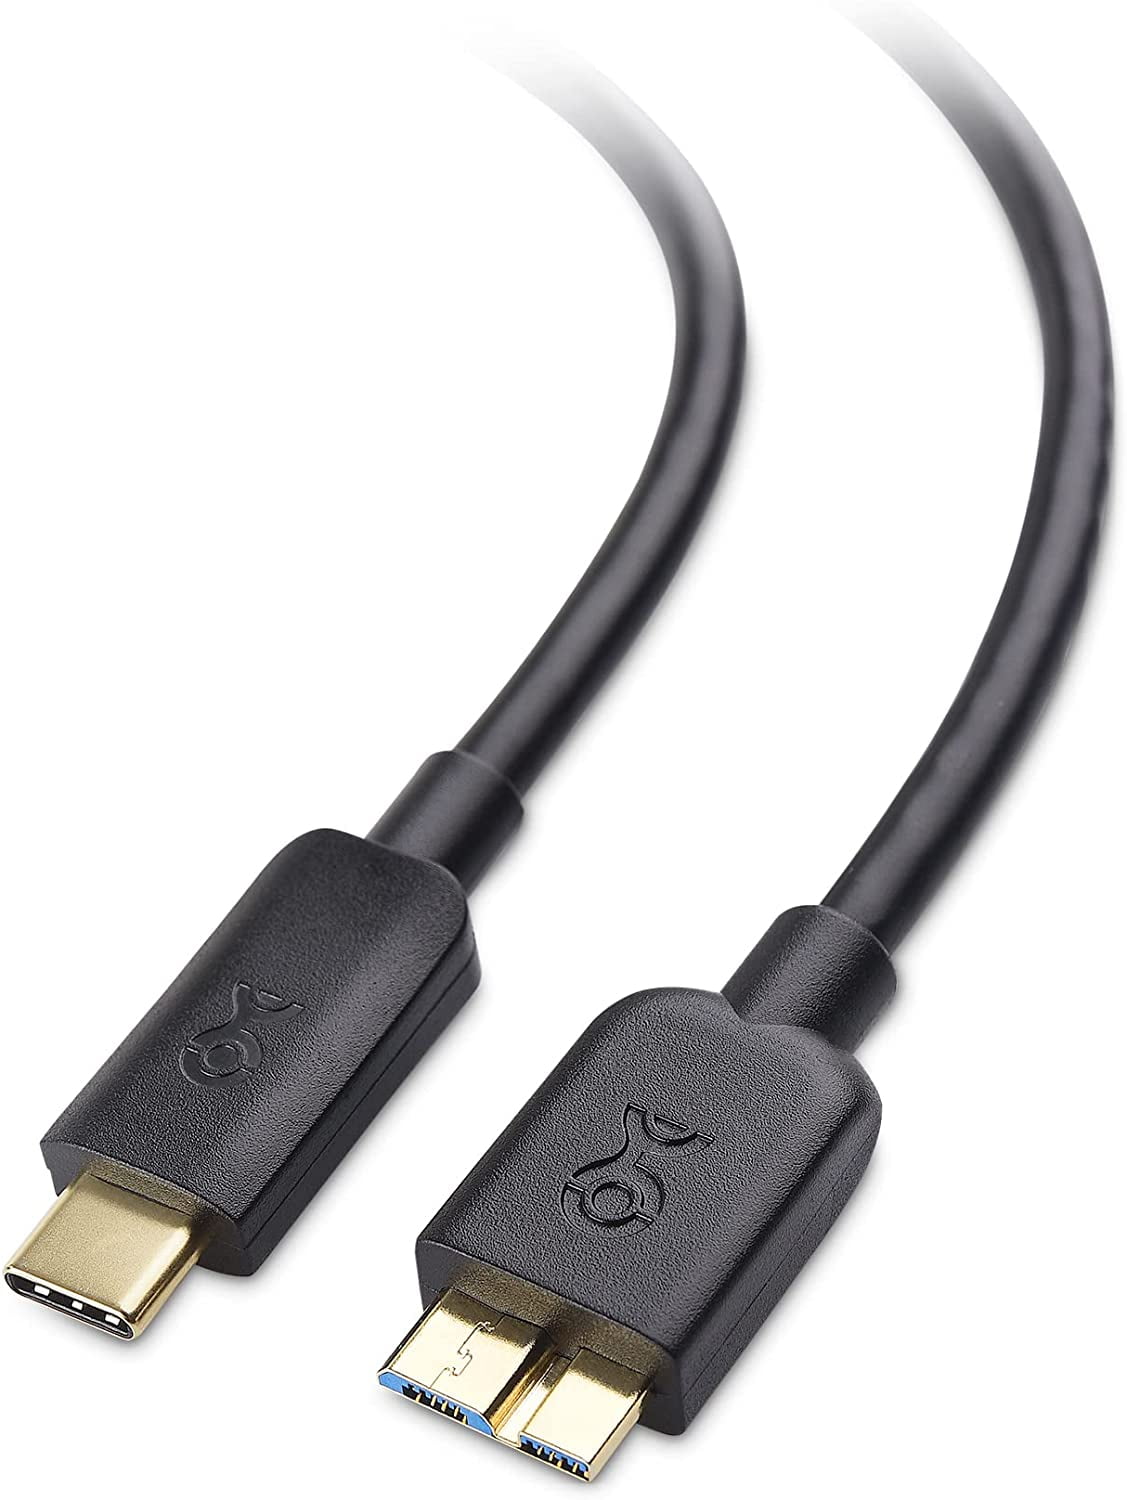 Adaptateur USB 2.0 USB-C vers Micro USB - Câbles USB-C